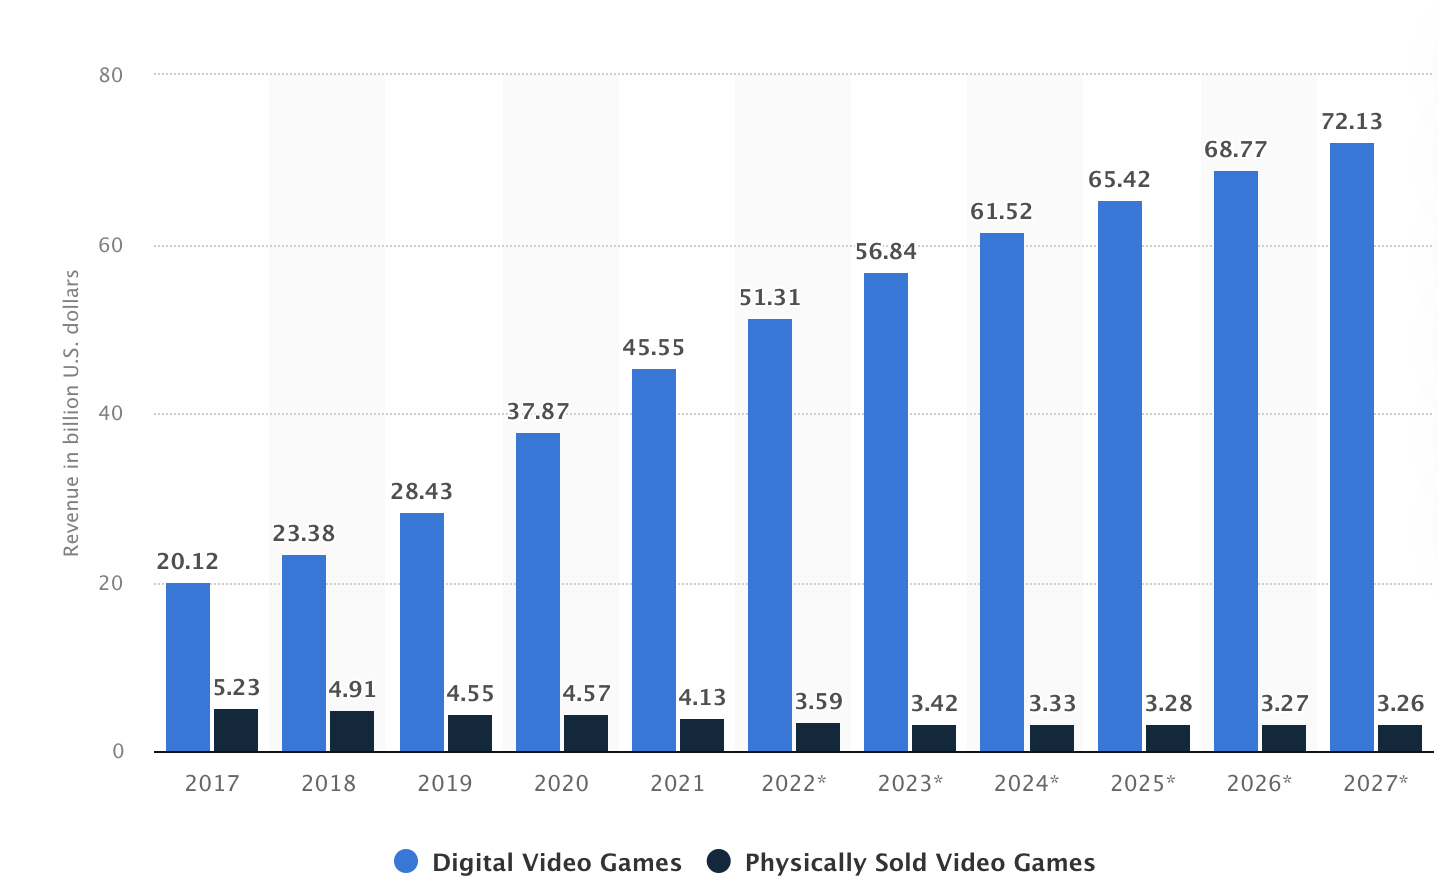 Video game market revenue